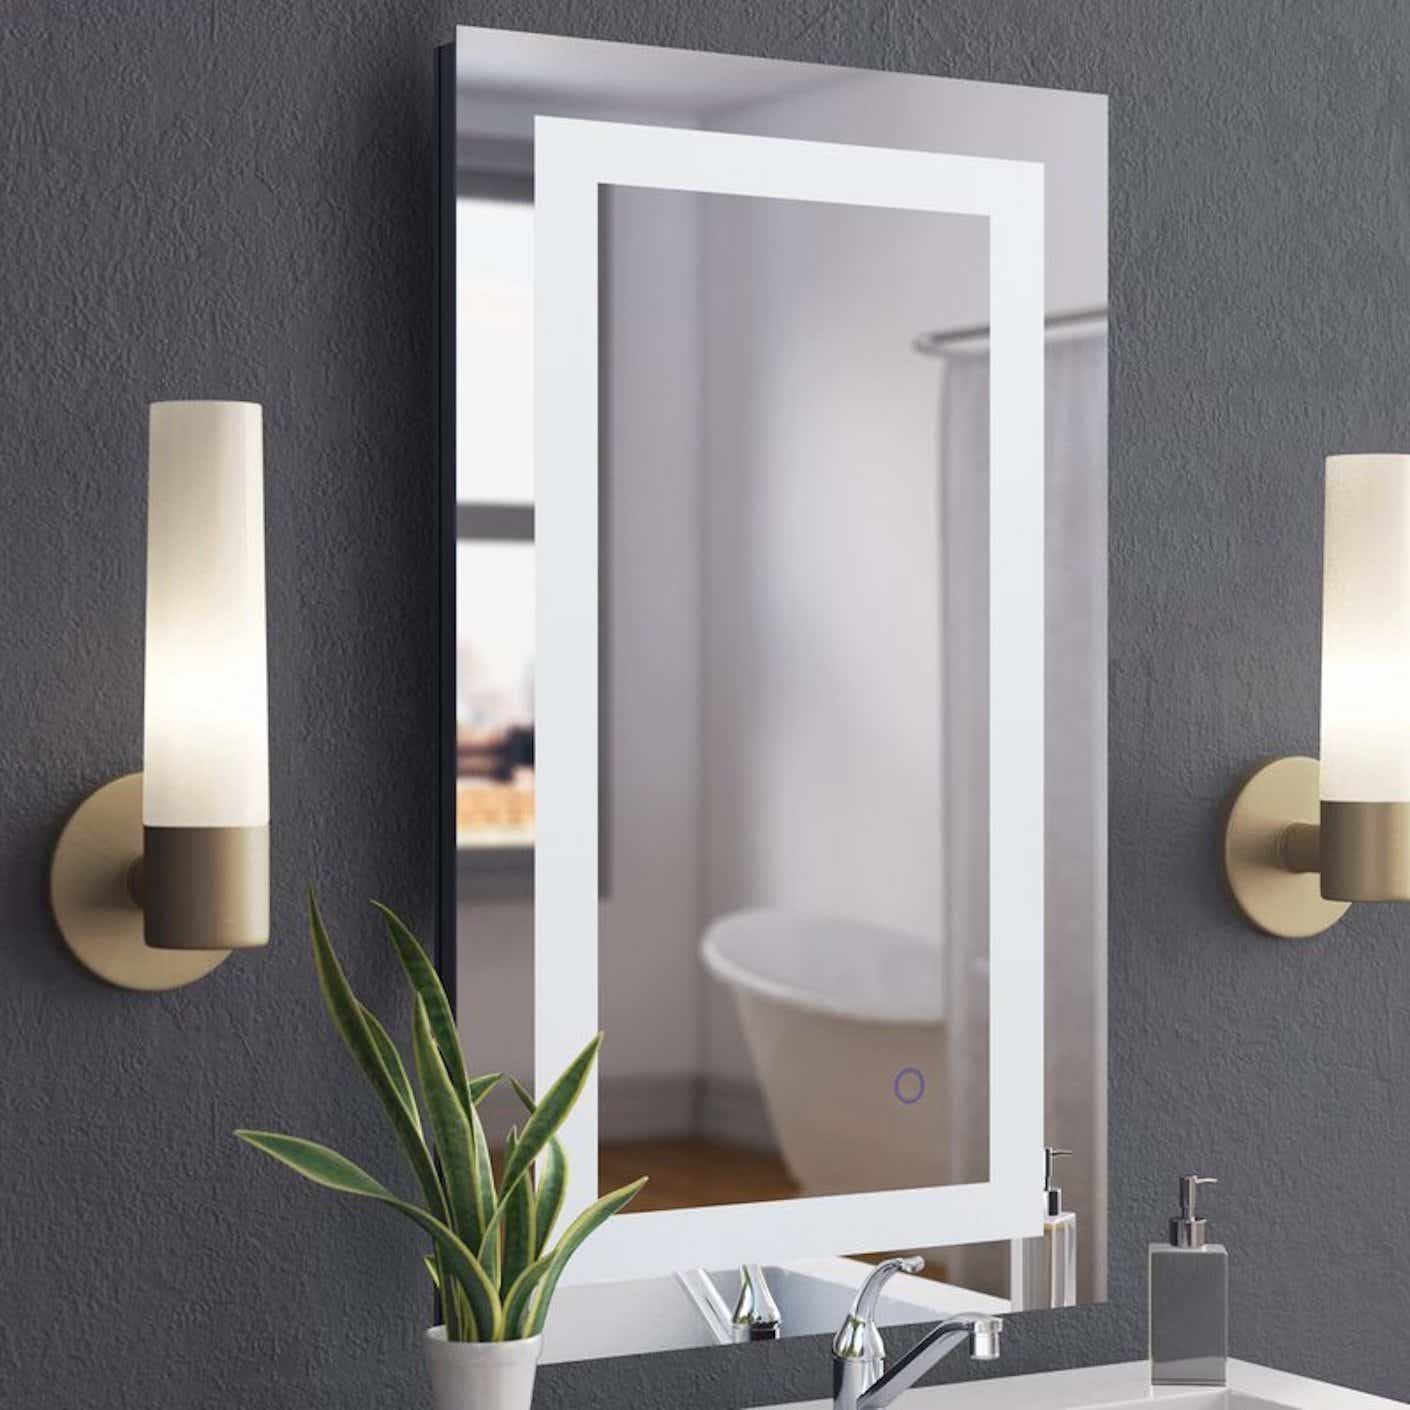 Langport bathroom vanity mirror